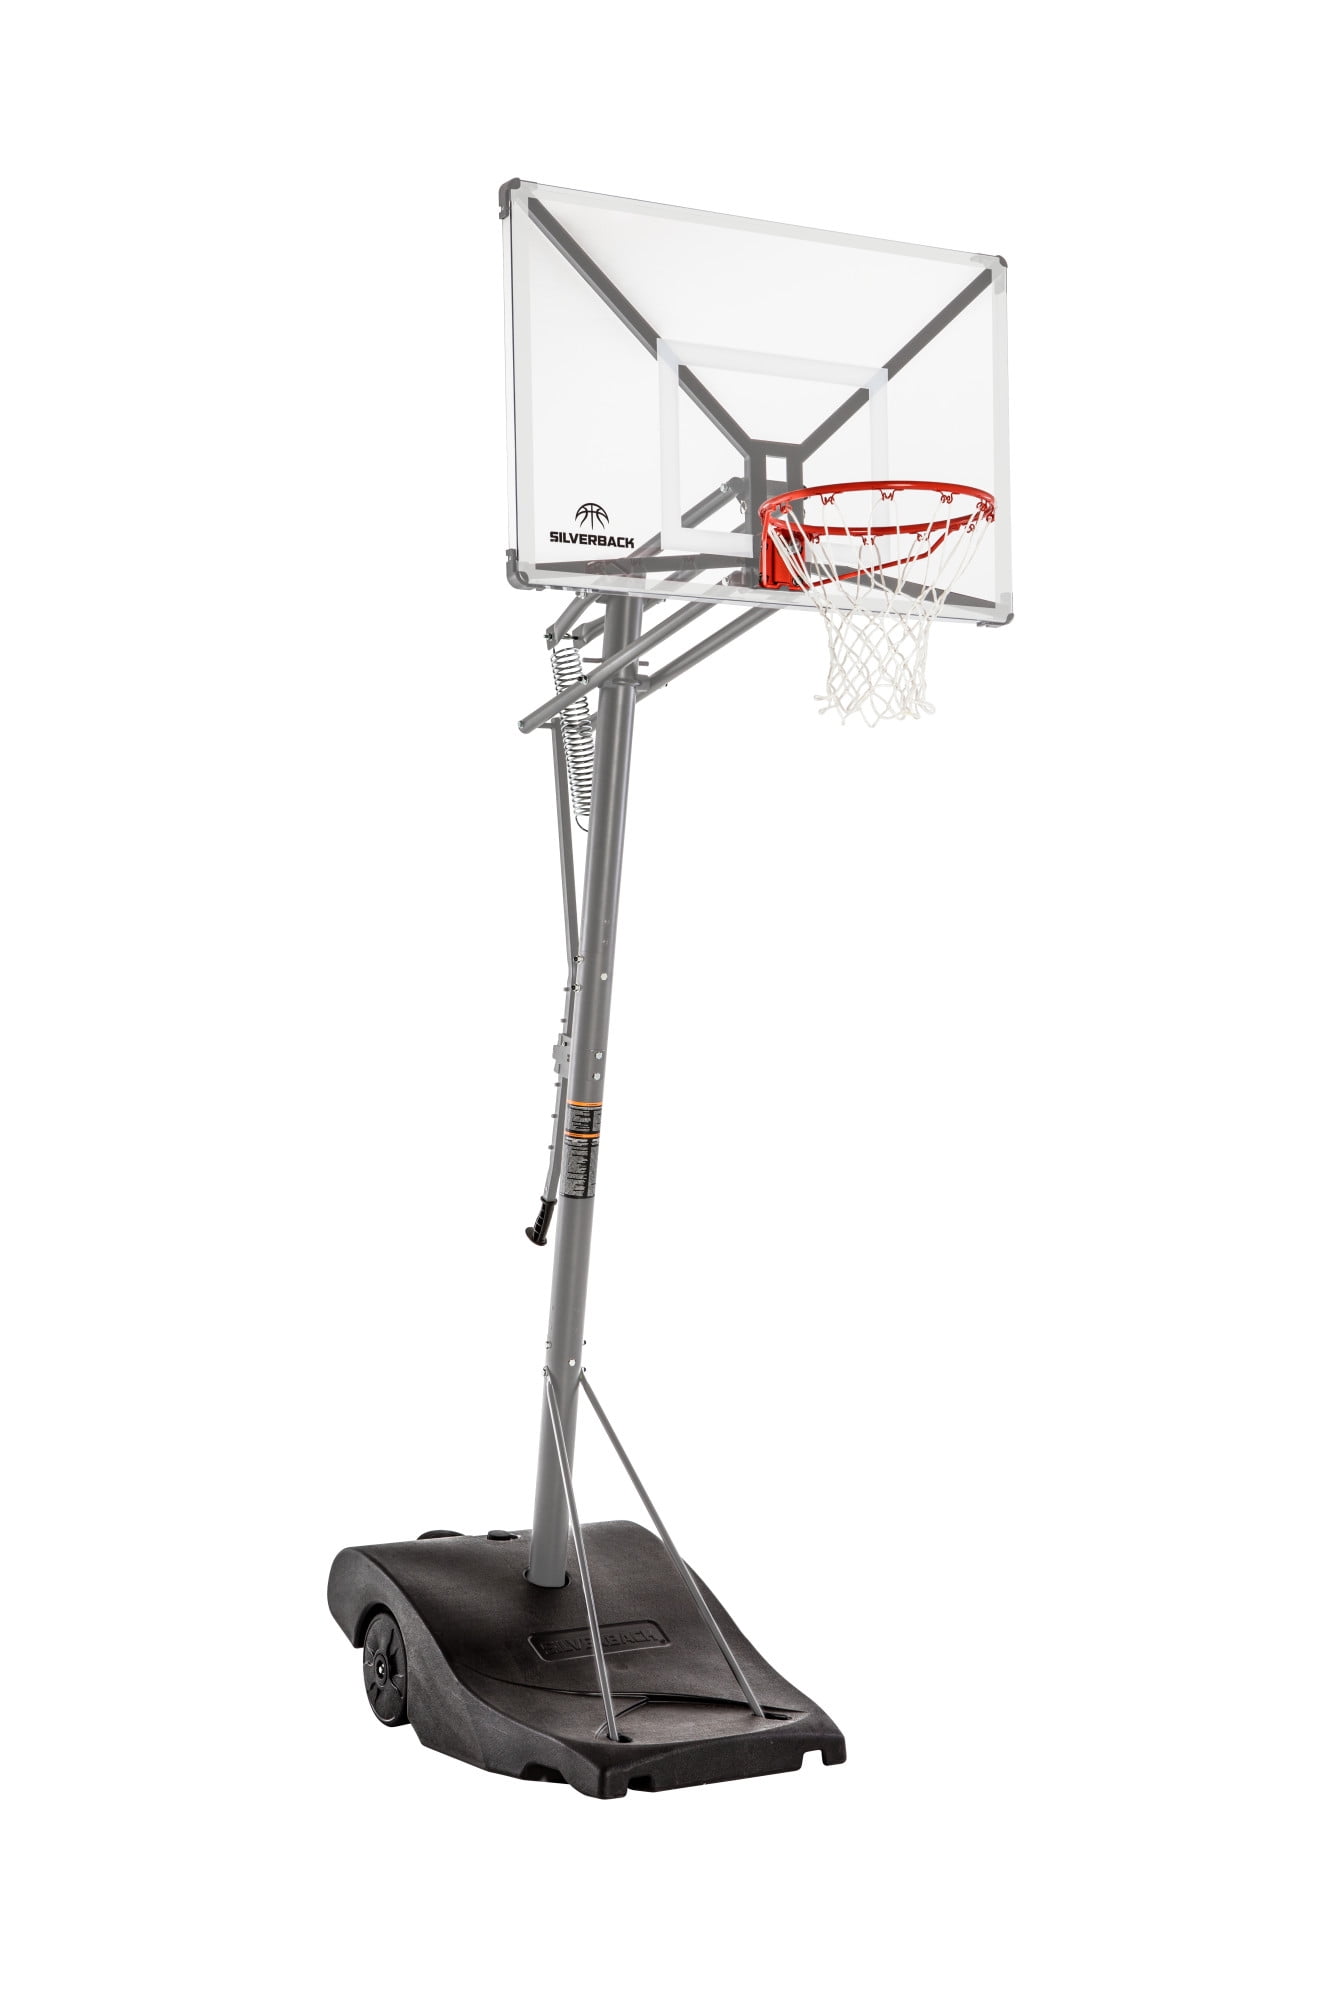 Hoop System SBX 50 Portable In. Backboard Height-Adjustable Silverback Basketball